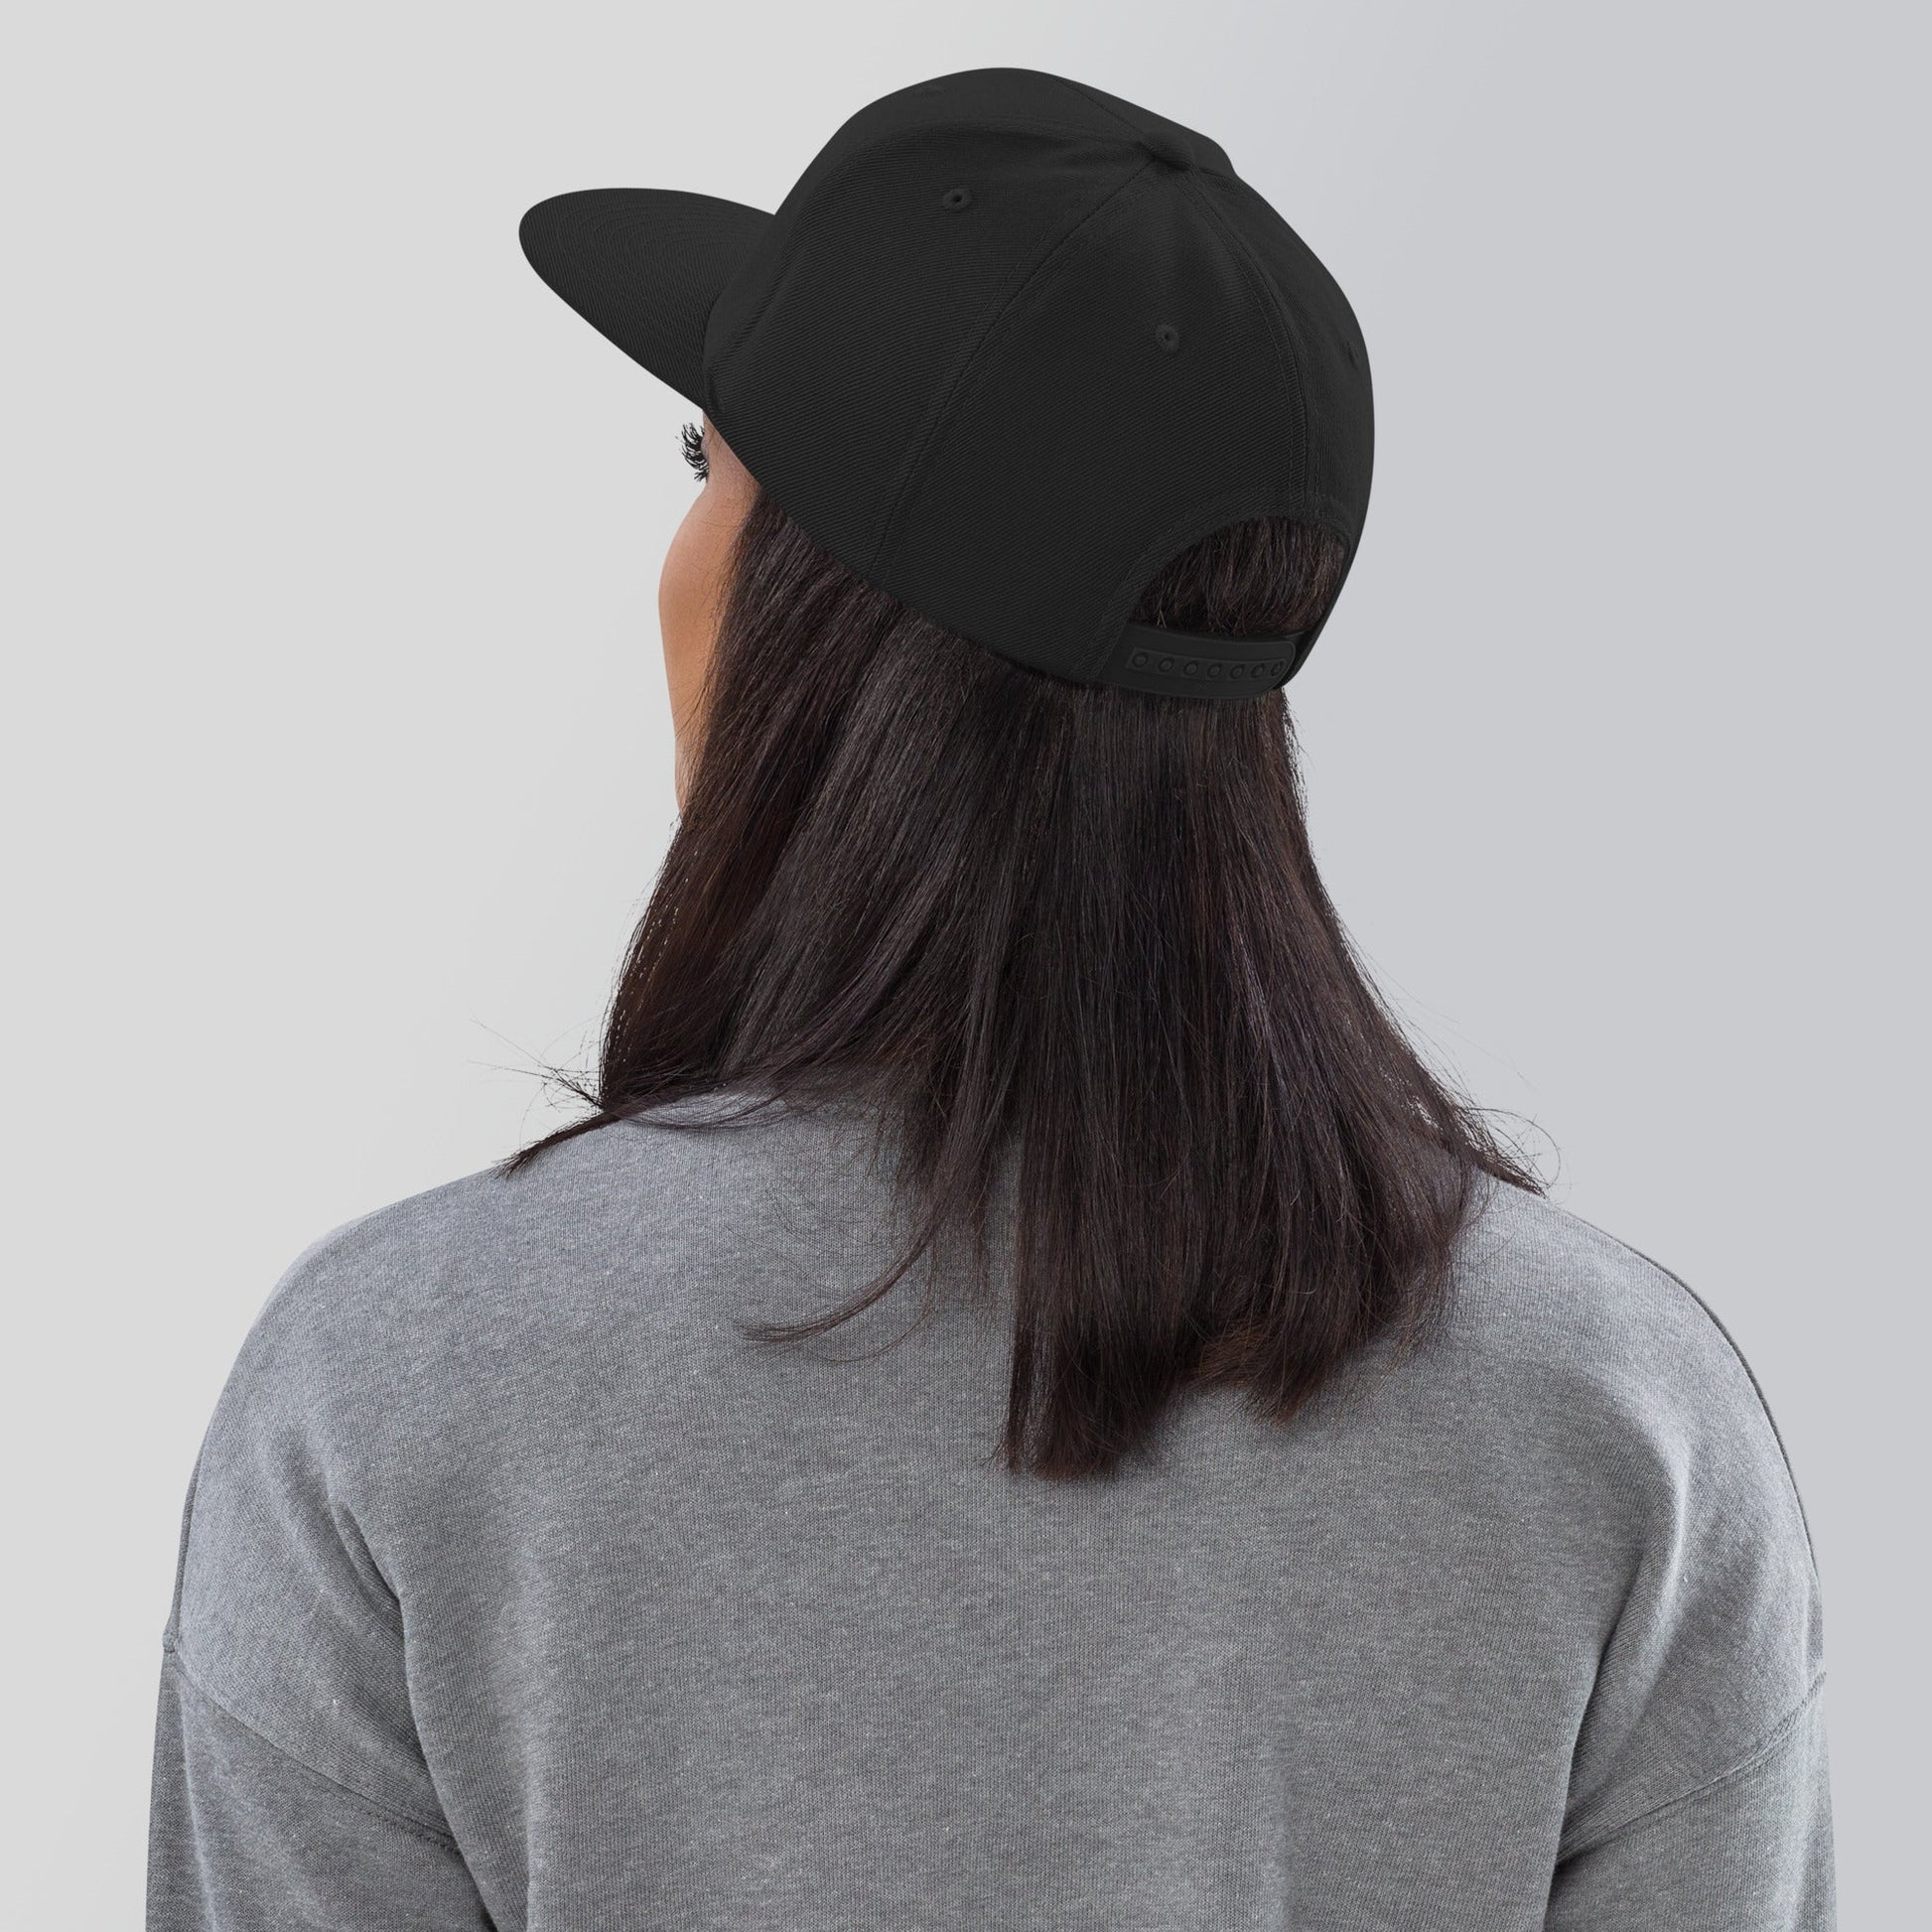 GFPA Snapback Hat - Girl From Peel Apparel - Snapback